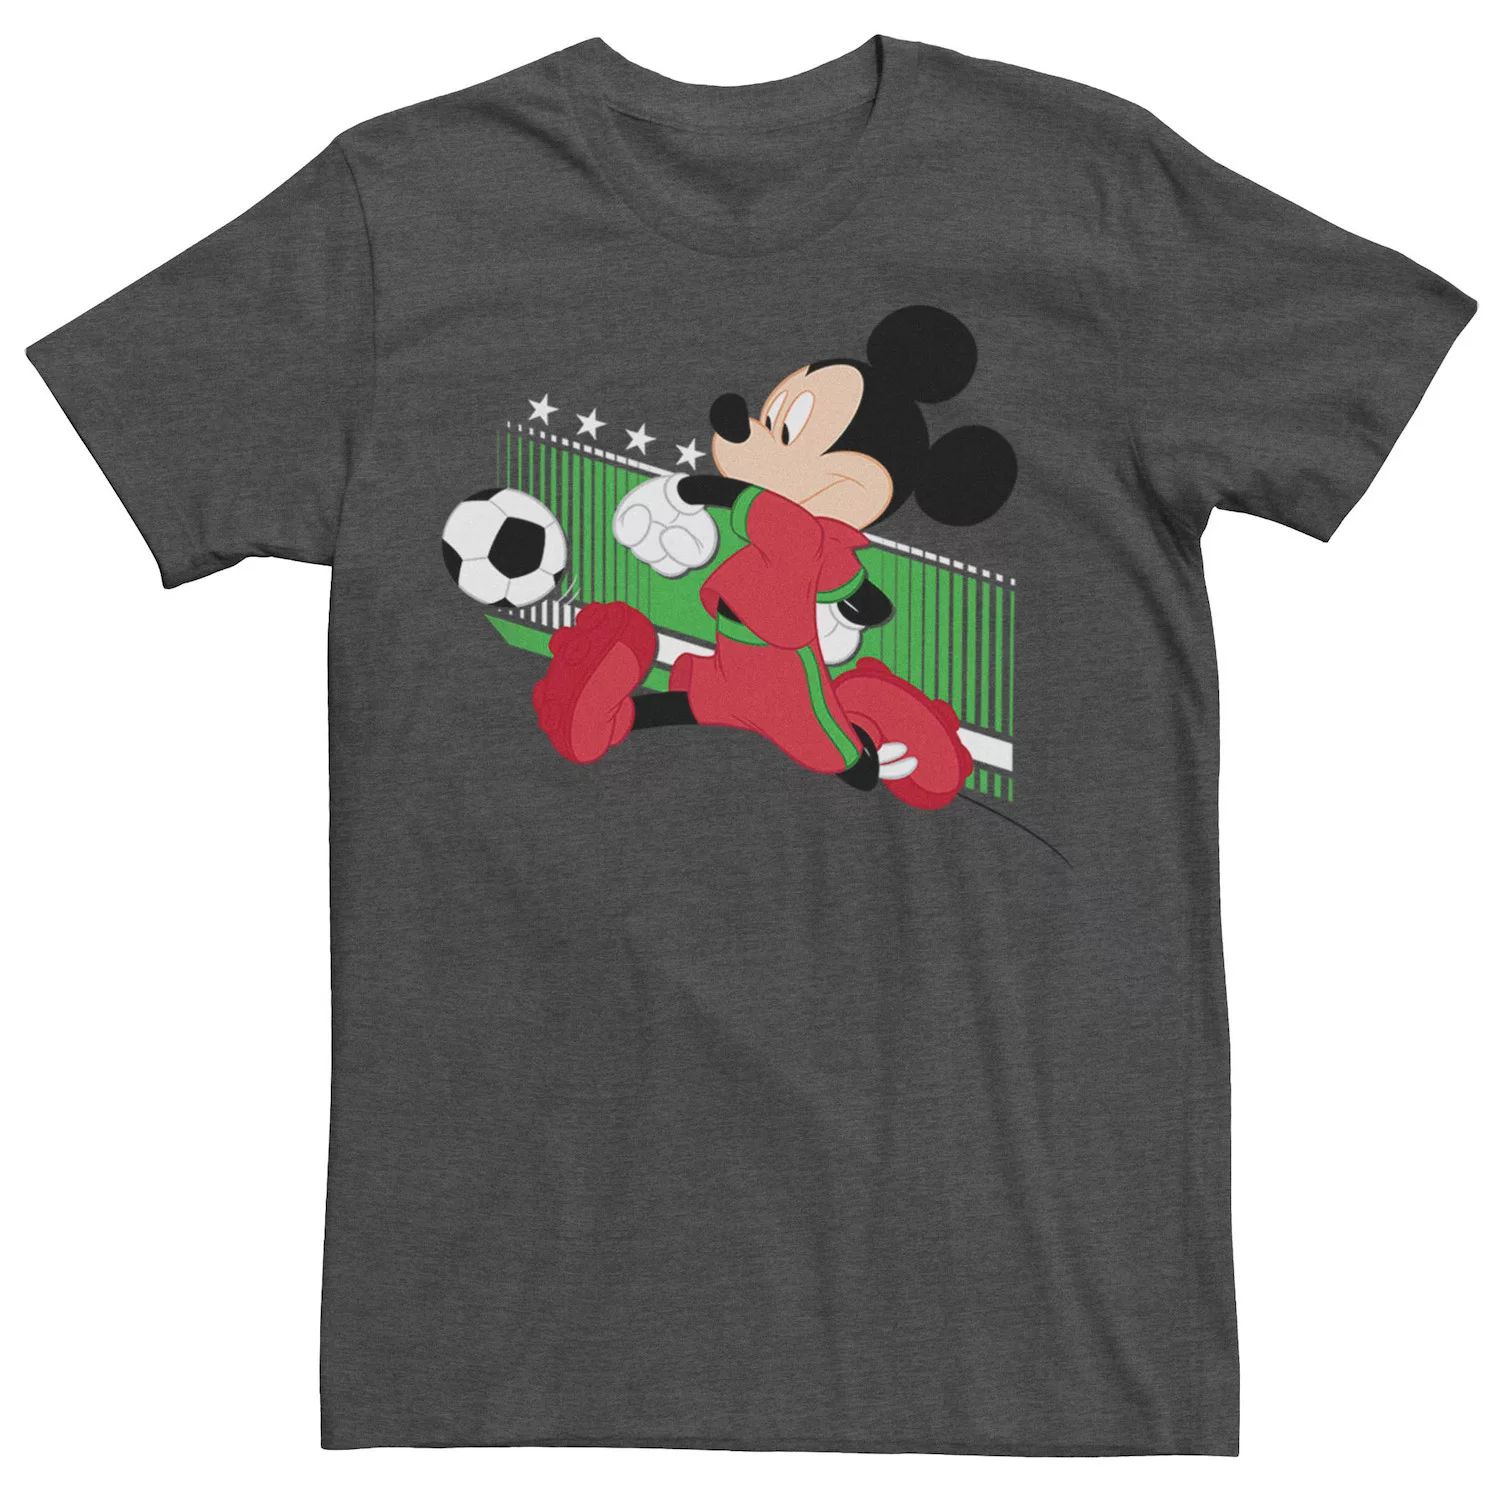 Мужская футболка с портретом Микки Мауса, Португалия, футбольная форма Disney мужская футболка с изображением микки мауса бразильская футбольная форма портретная футболка disney